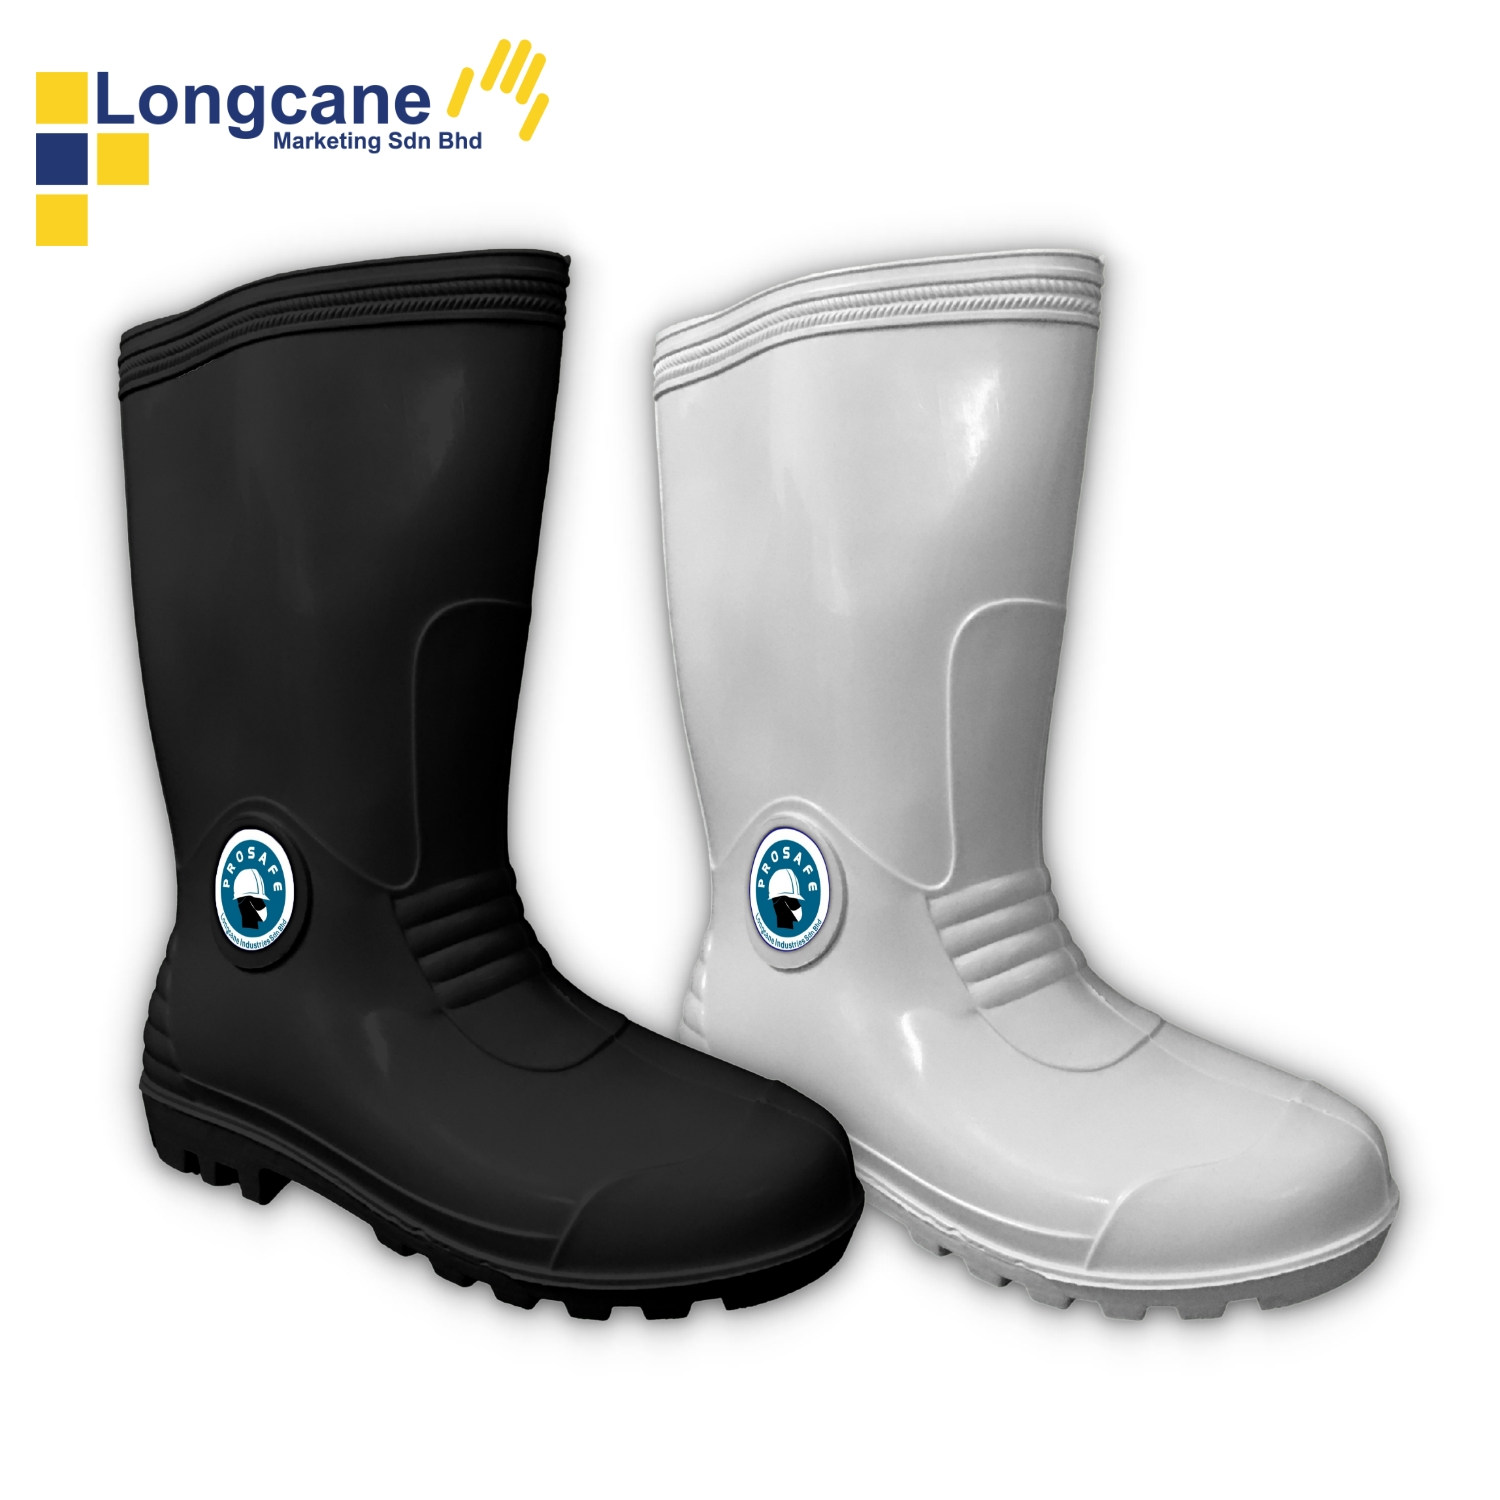 13" Prosafe Water Boots - Longcane Marketing Sdn. Bhd.